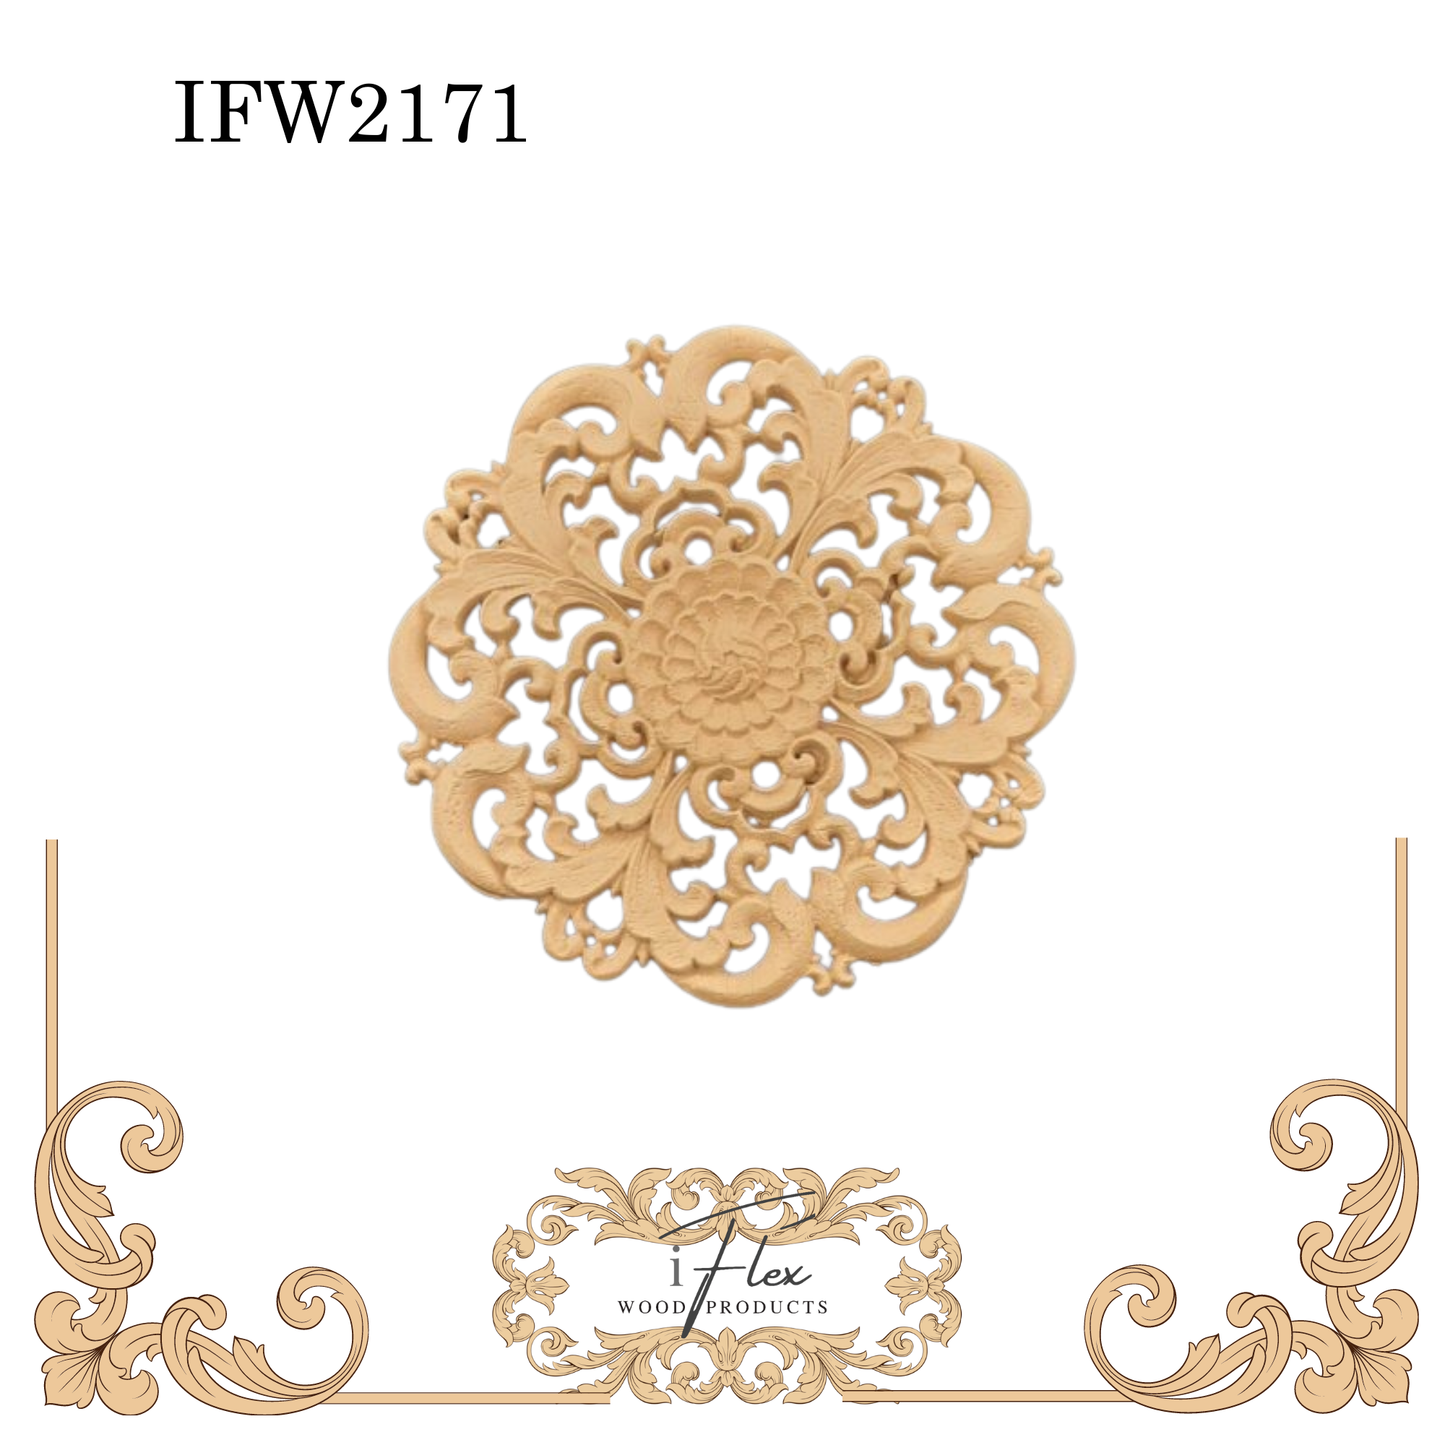 IFW 2171 iFlex Wood Products, bendable mouldings, flexible, wooden appliques, centerpiece, decorative